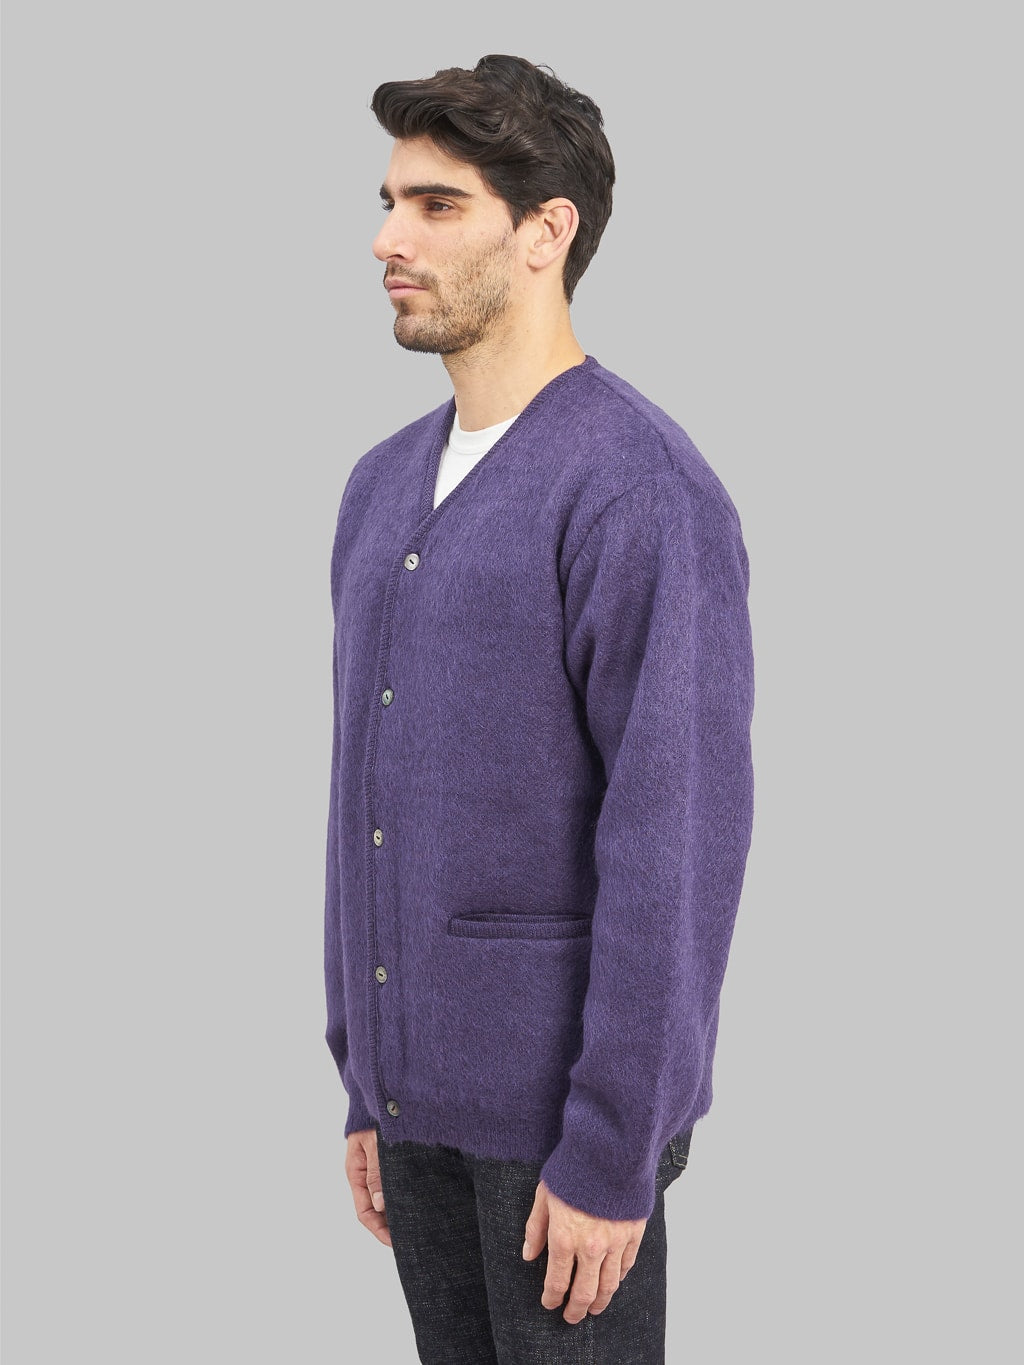 Trophy Clothing Mohair Knit Cardigan Dark Purple model side fit